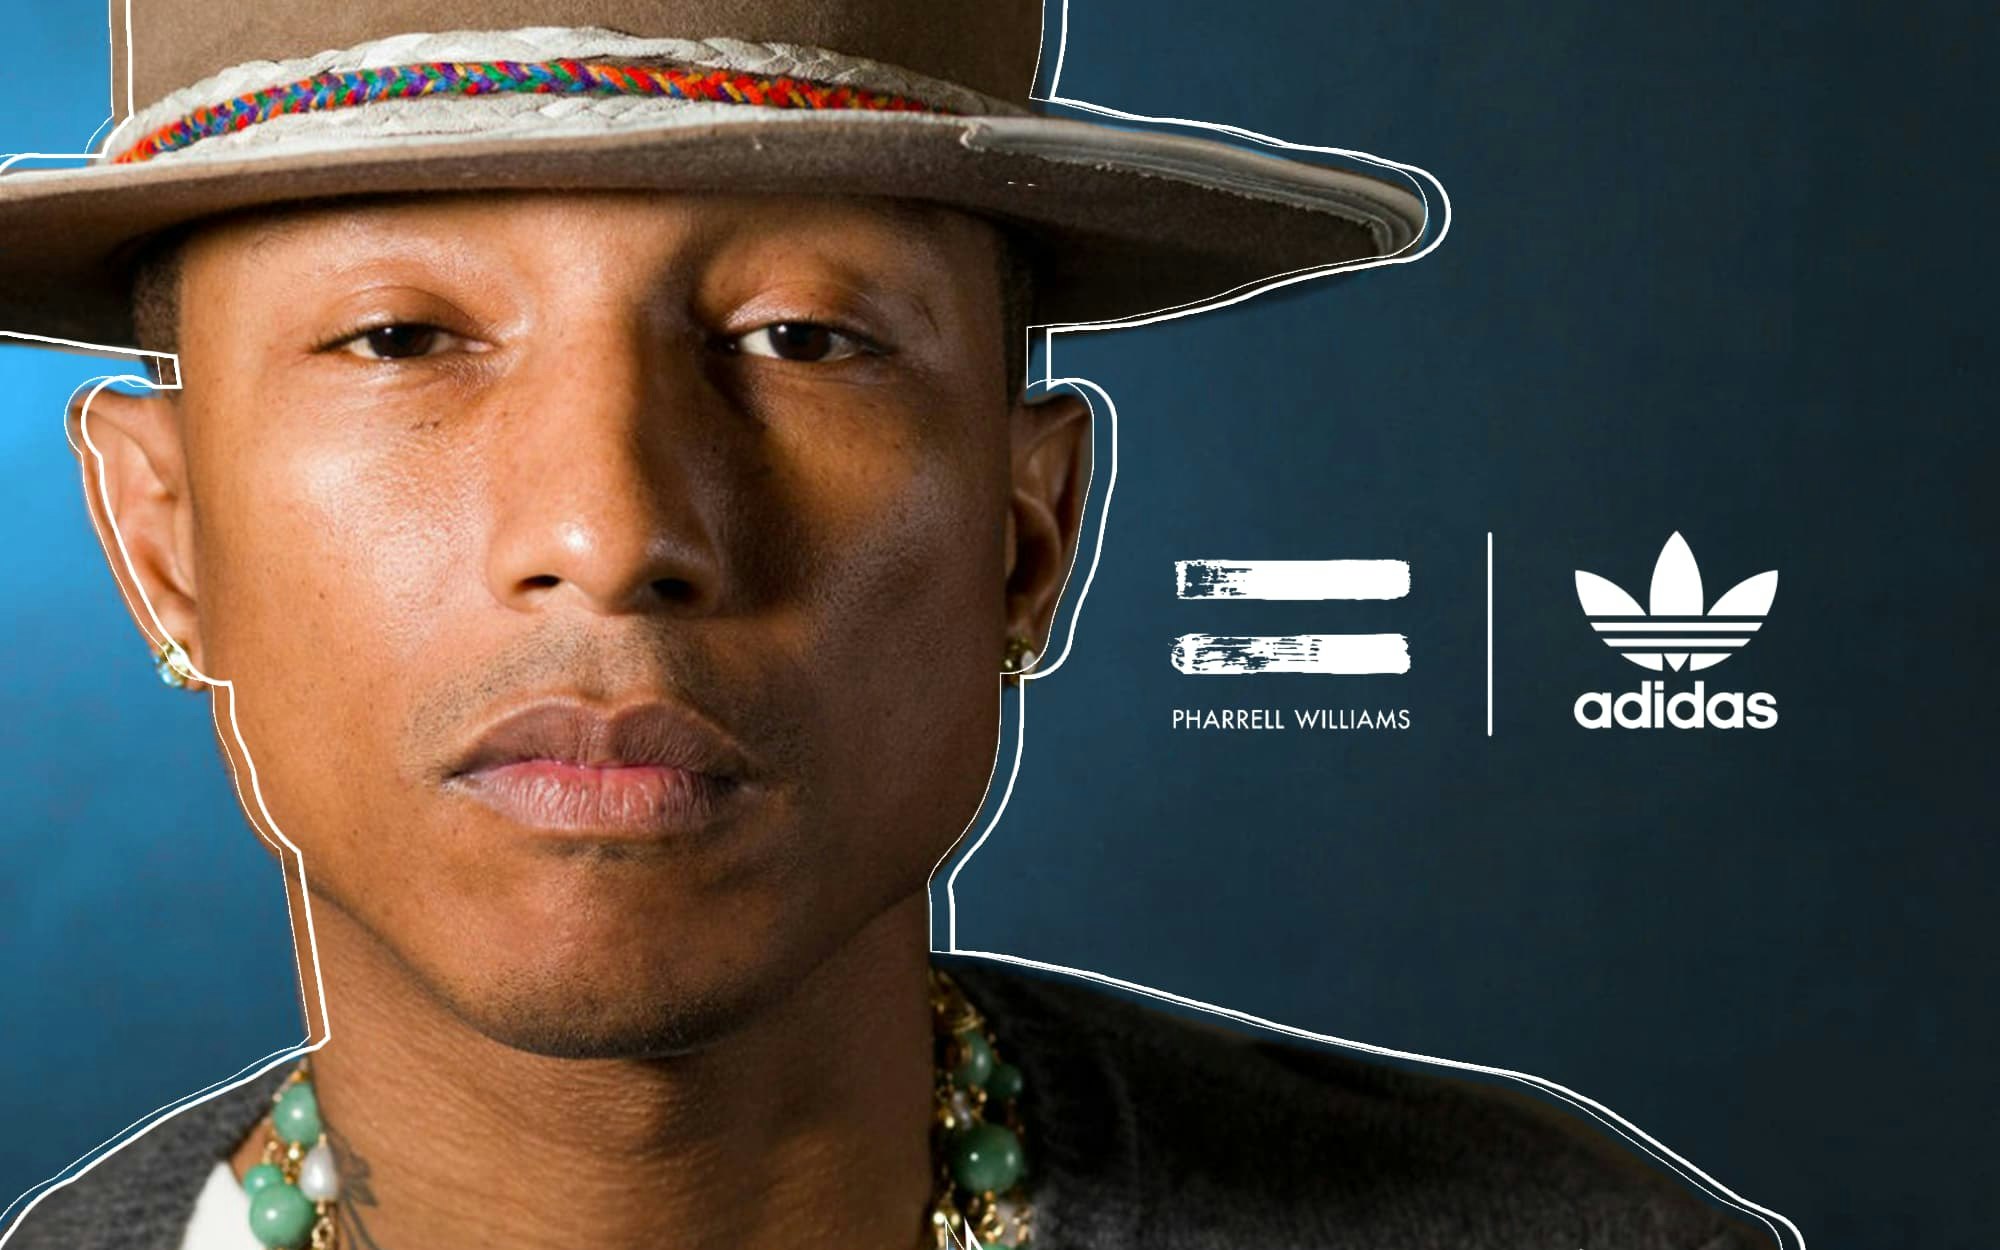 Pharrell Williams x adidas 